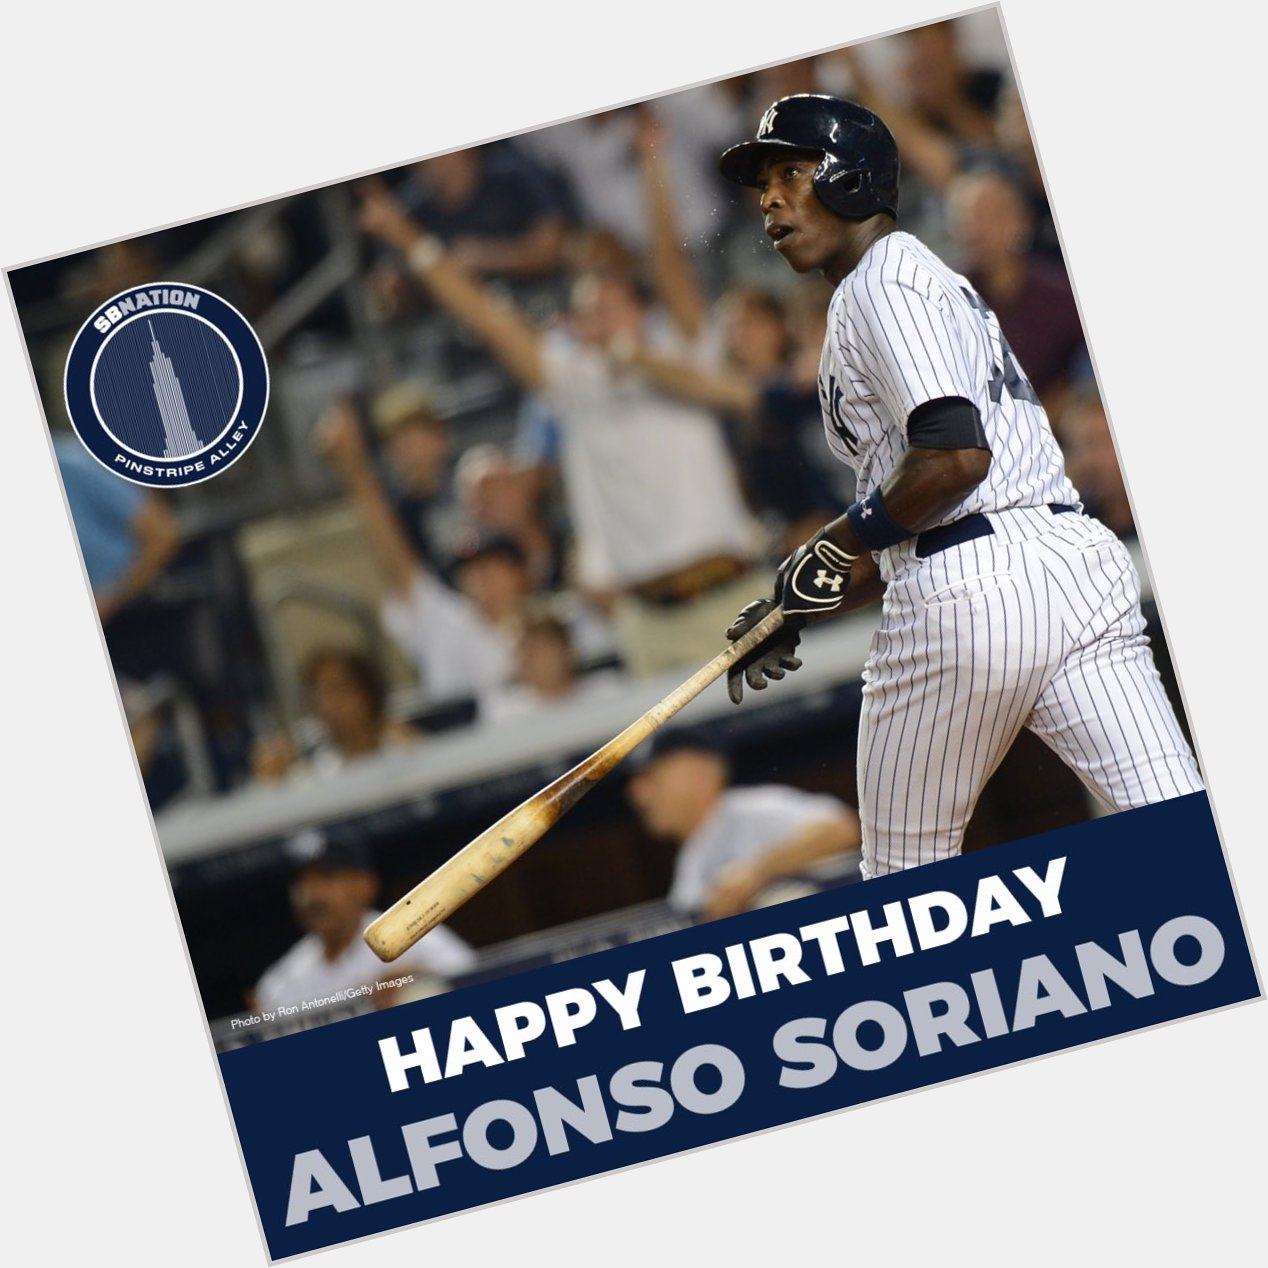 Sending a big happy birthday to Alfonso Soriano! 